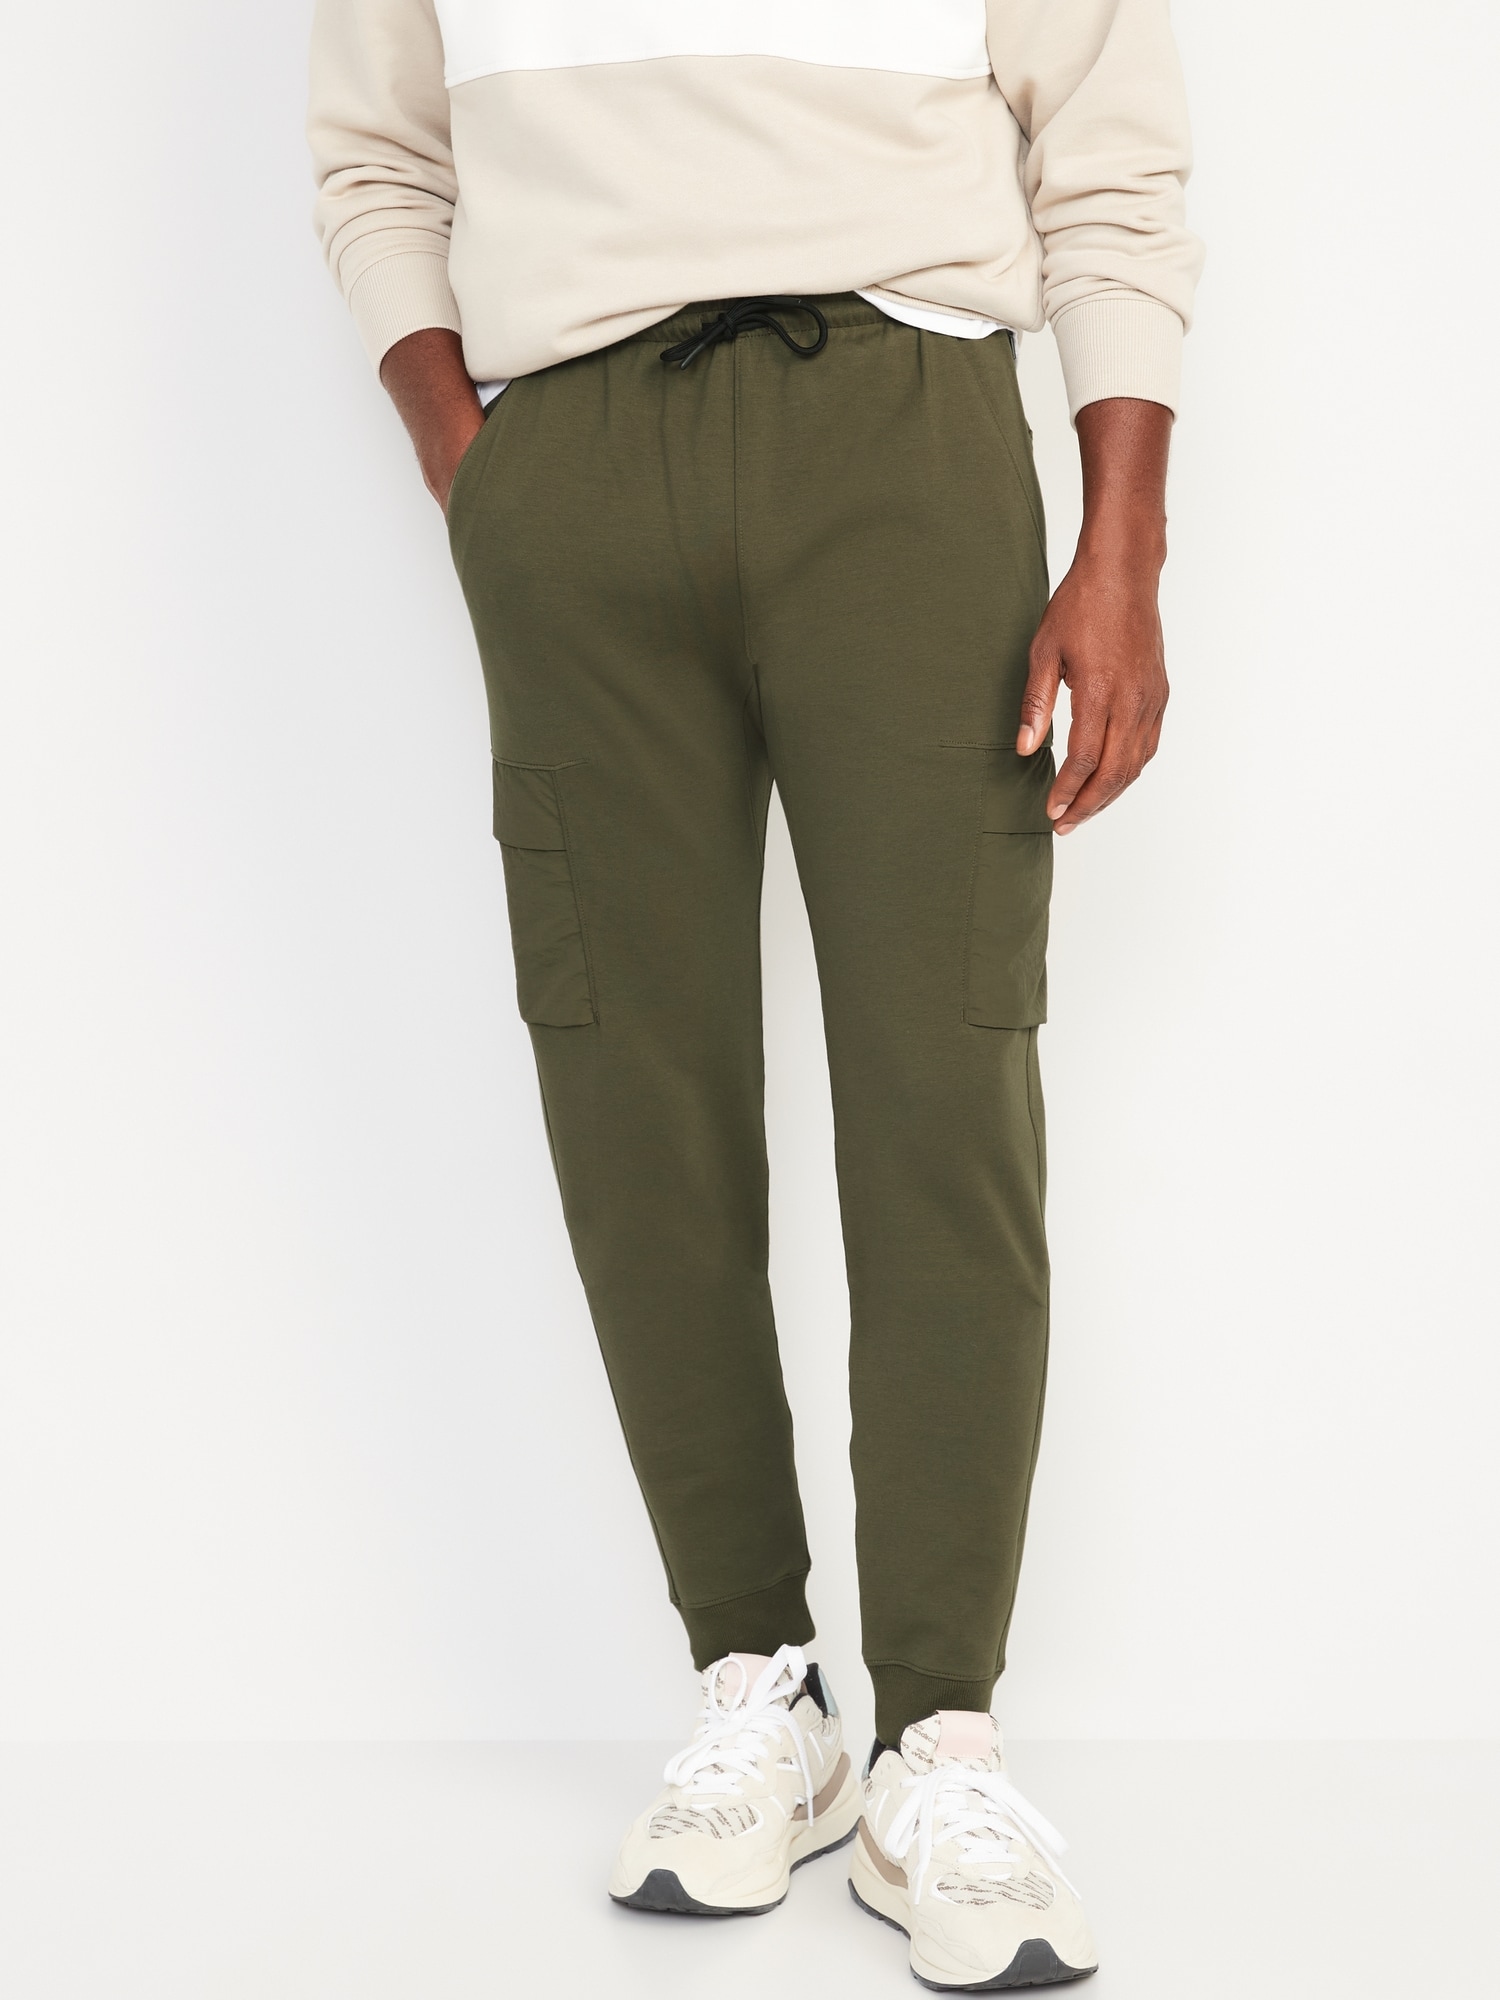 3245 OLGA Tricot Warm Up Pants Navy - The Uniform Store